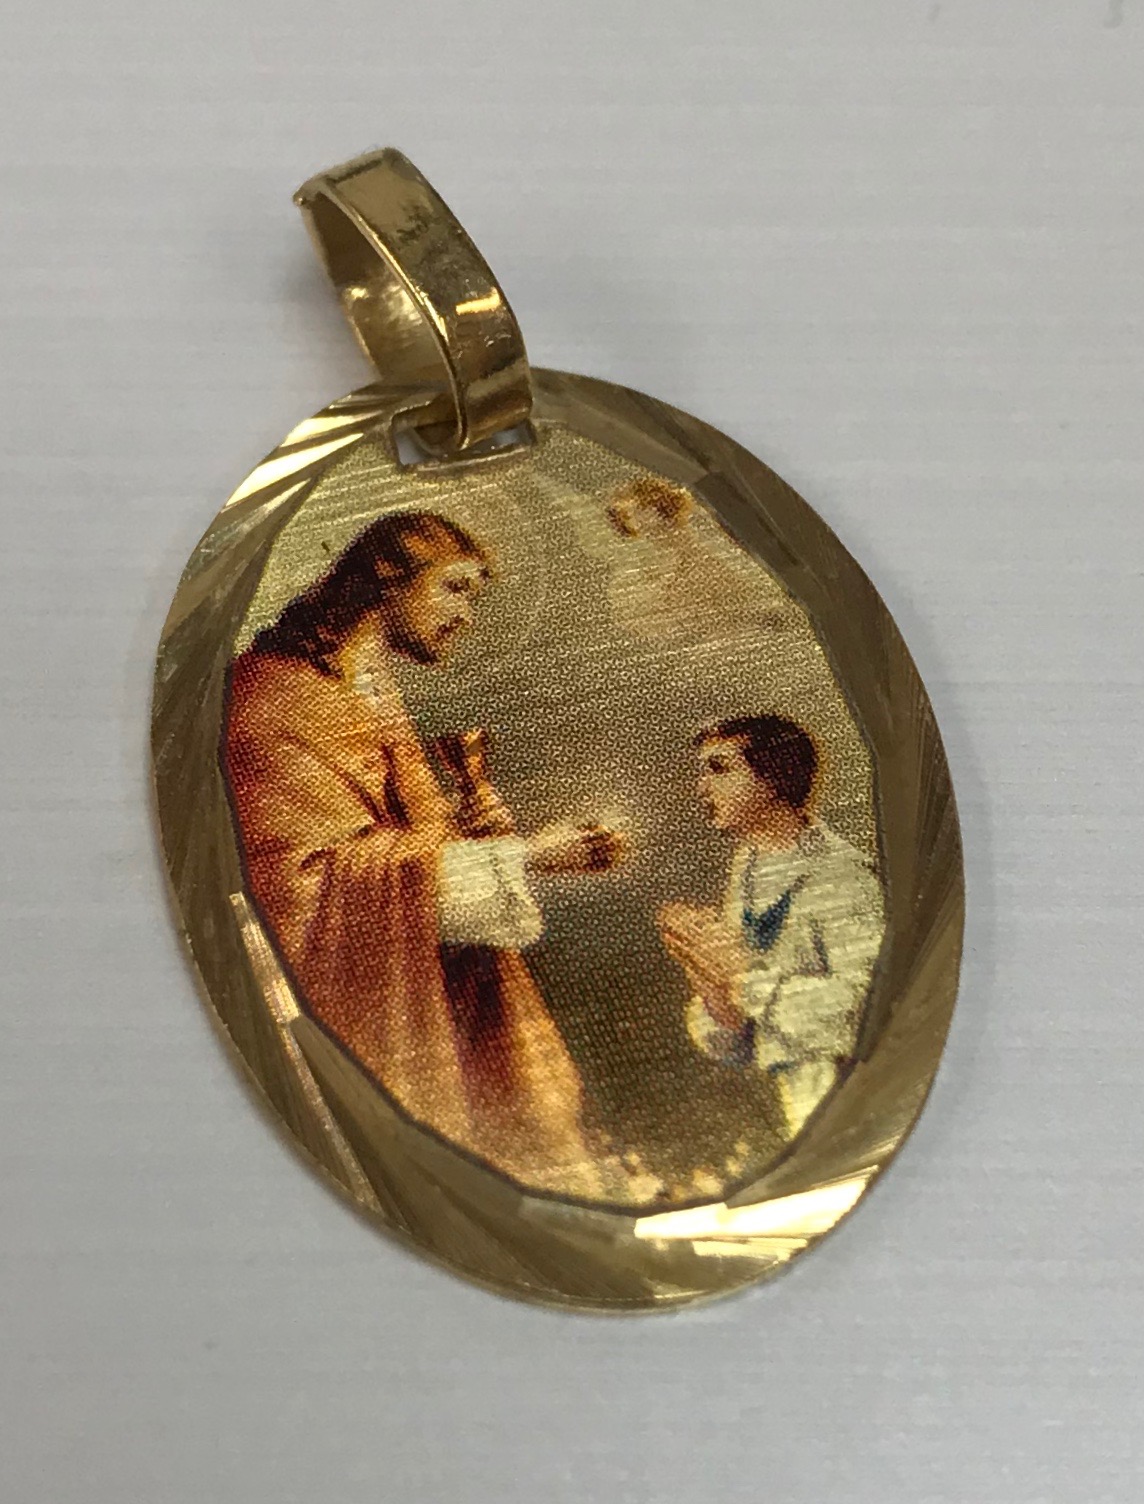 Communion boy medal - Item # 14605